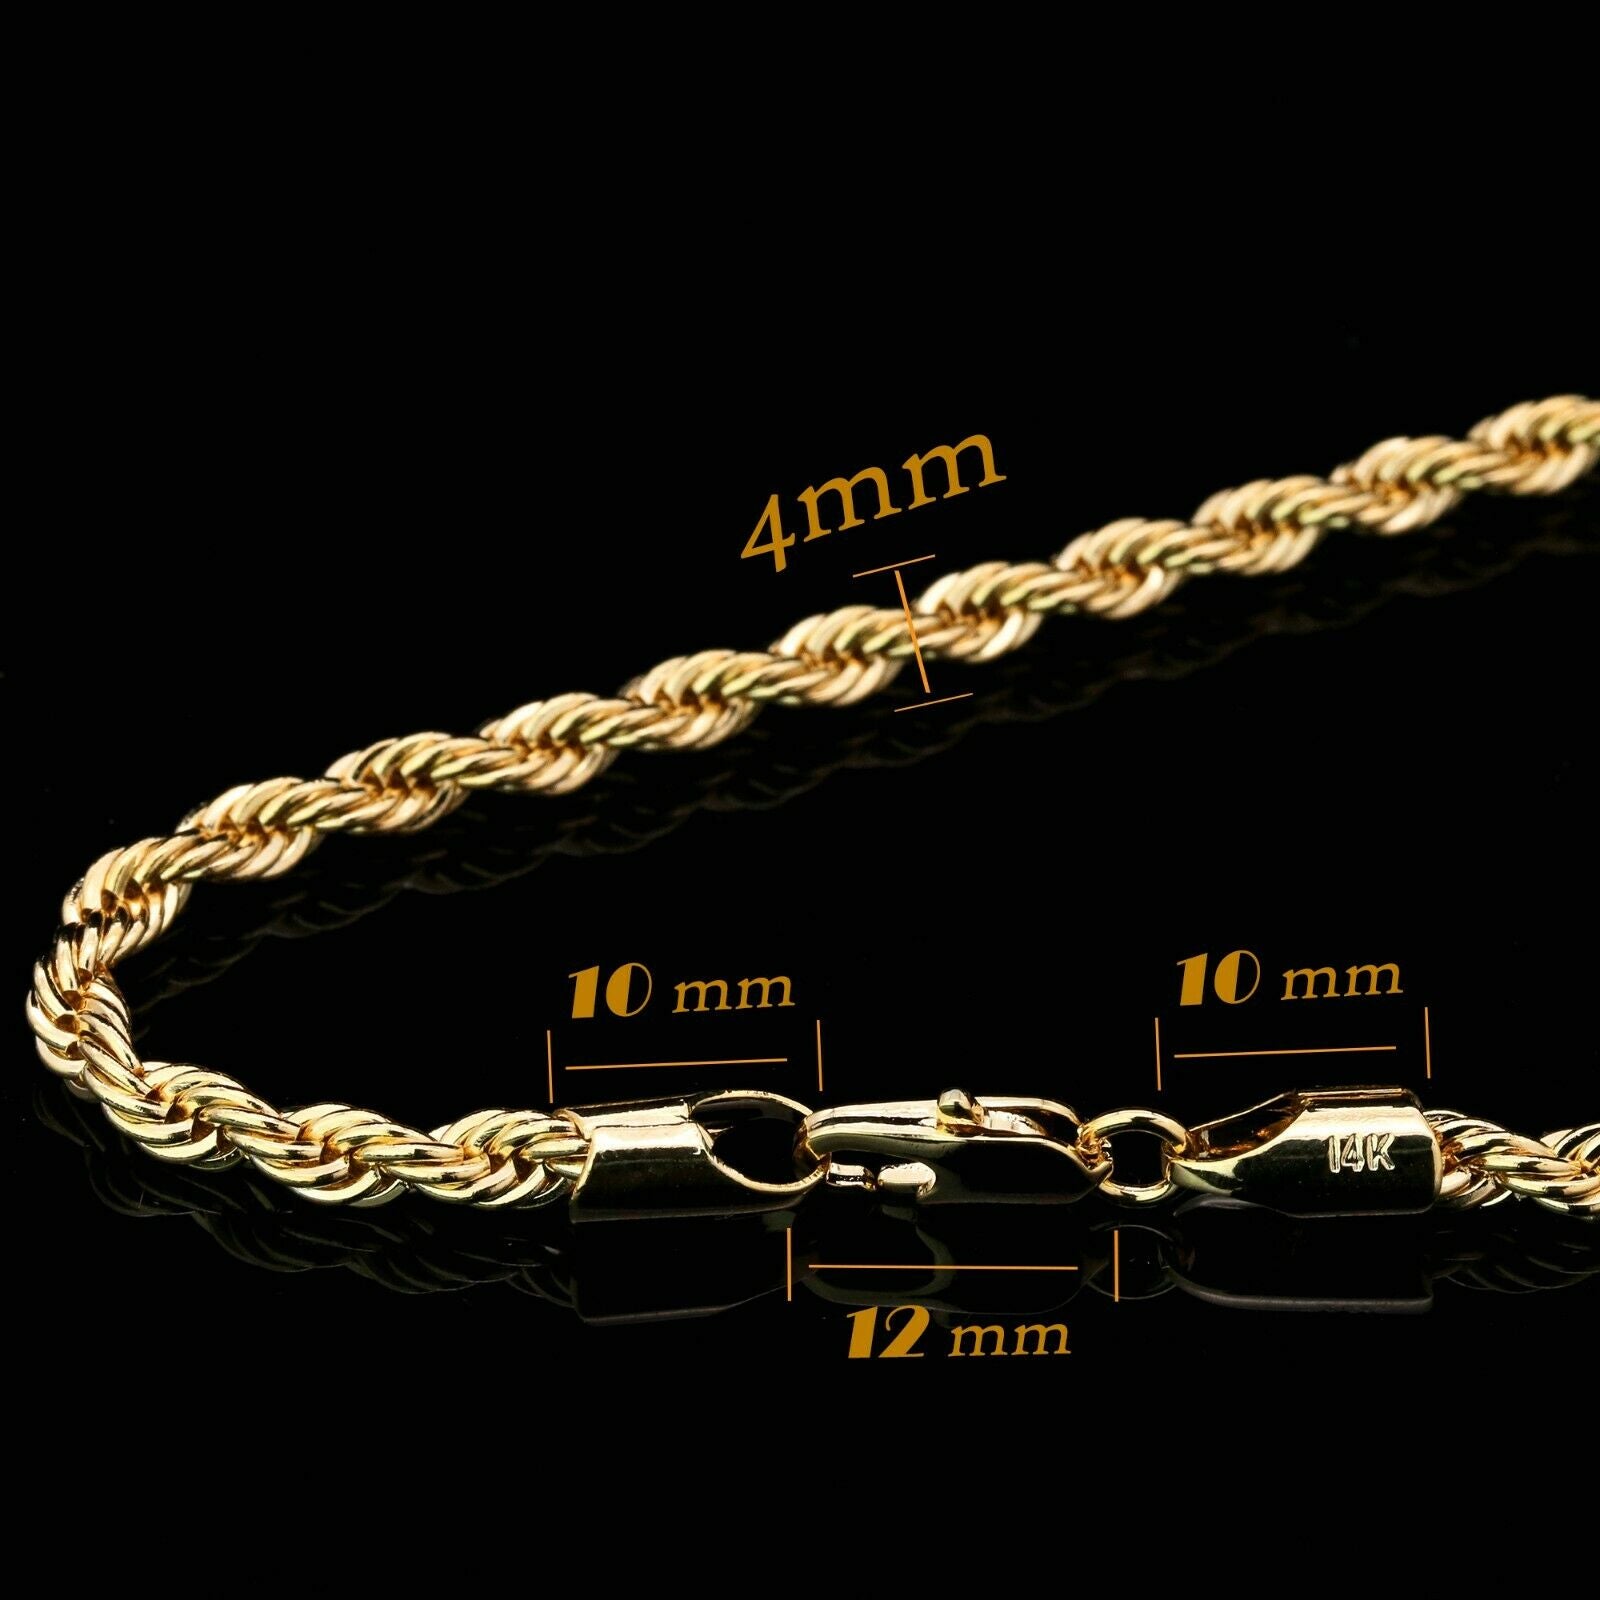 14k Gold Plated Hip-Hop CZ LIT FIRE Pendant 20" Choker Rope Chain Necklace